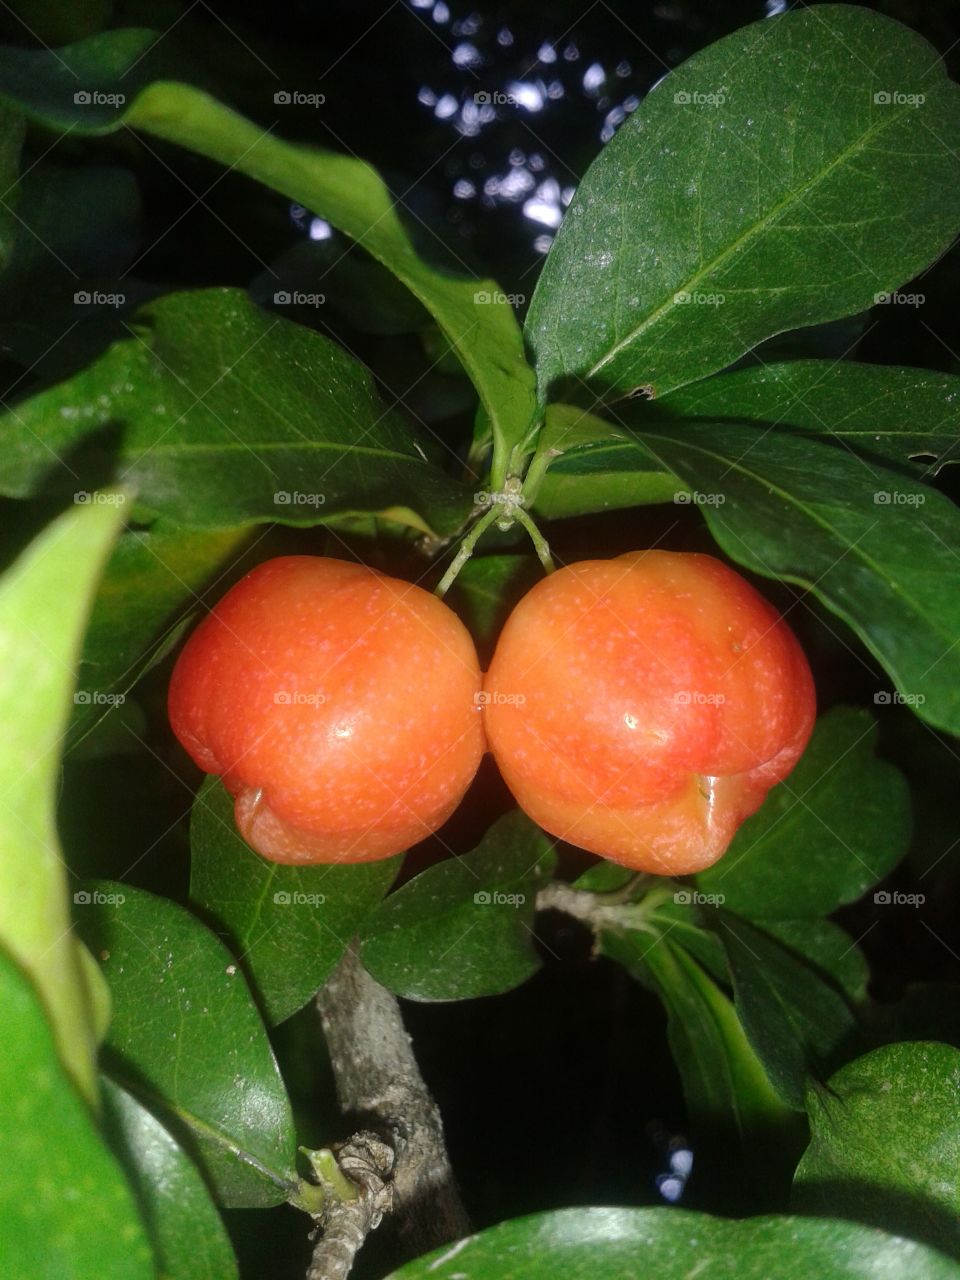 dominican cherry